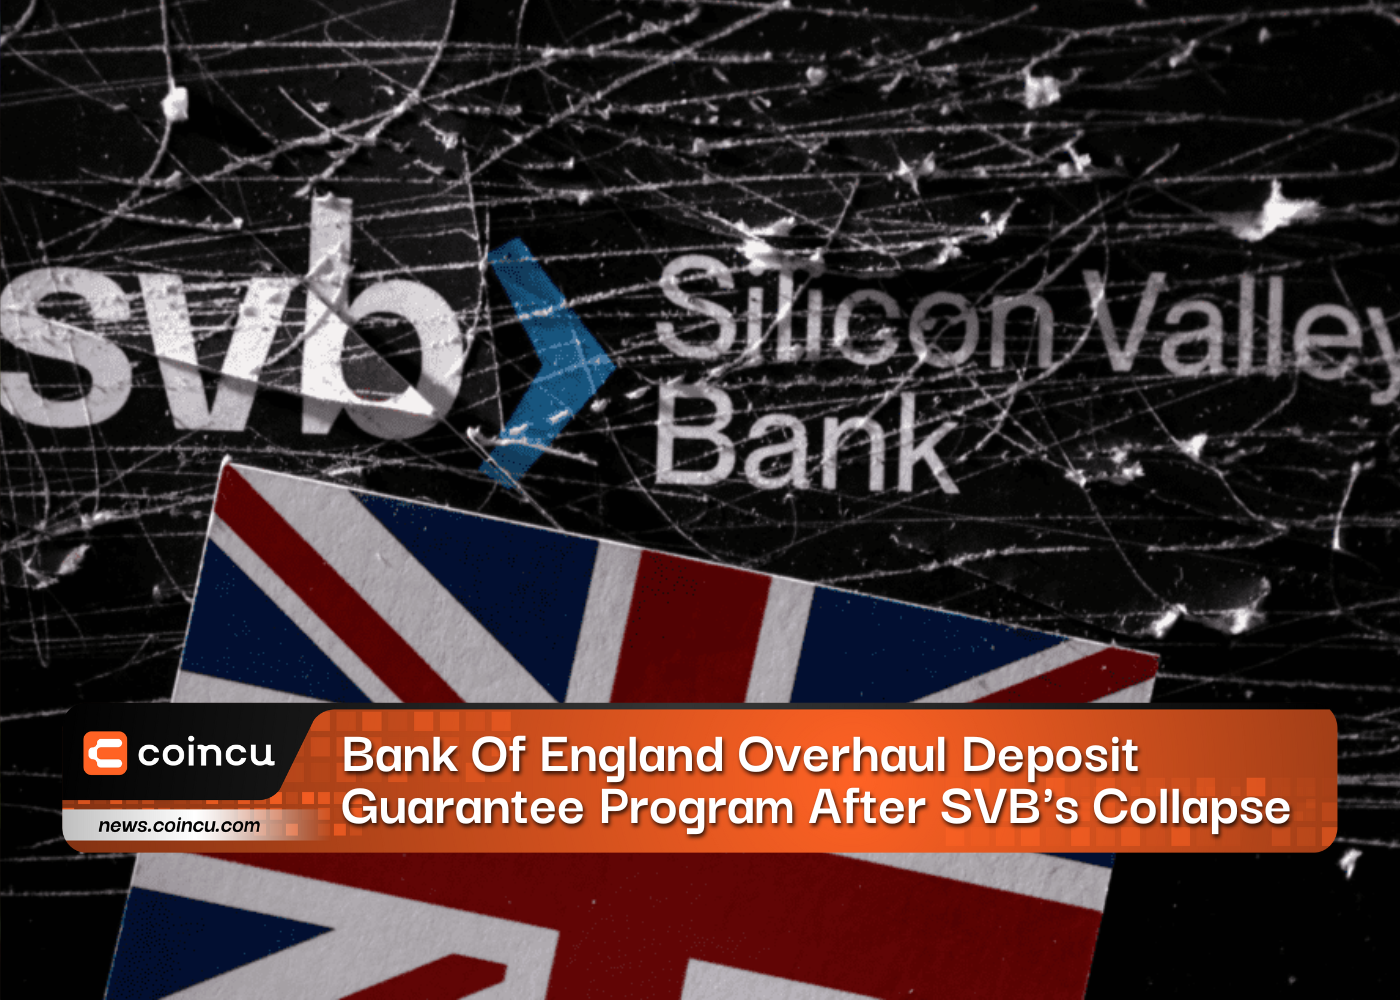 Bank Of England Overhaul Deposit Guarantee Program After SVB's Collapse